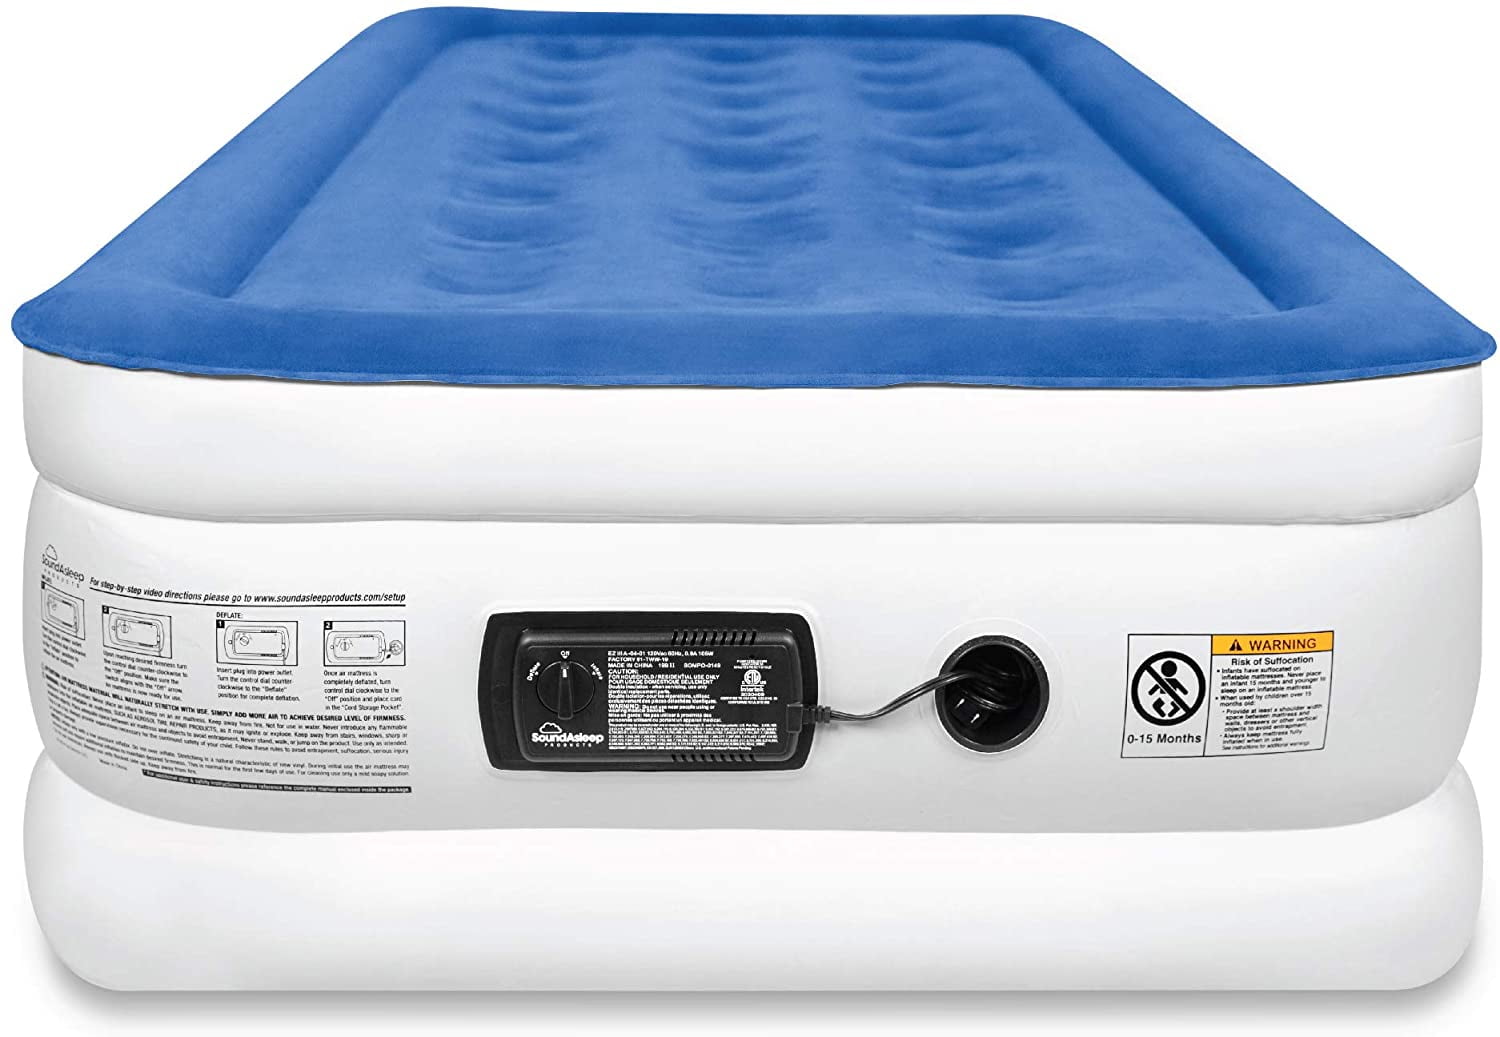 soundasleep camping series air mattress